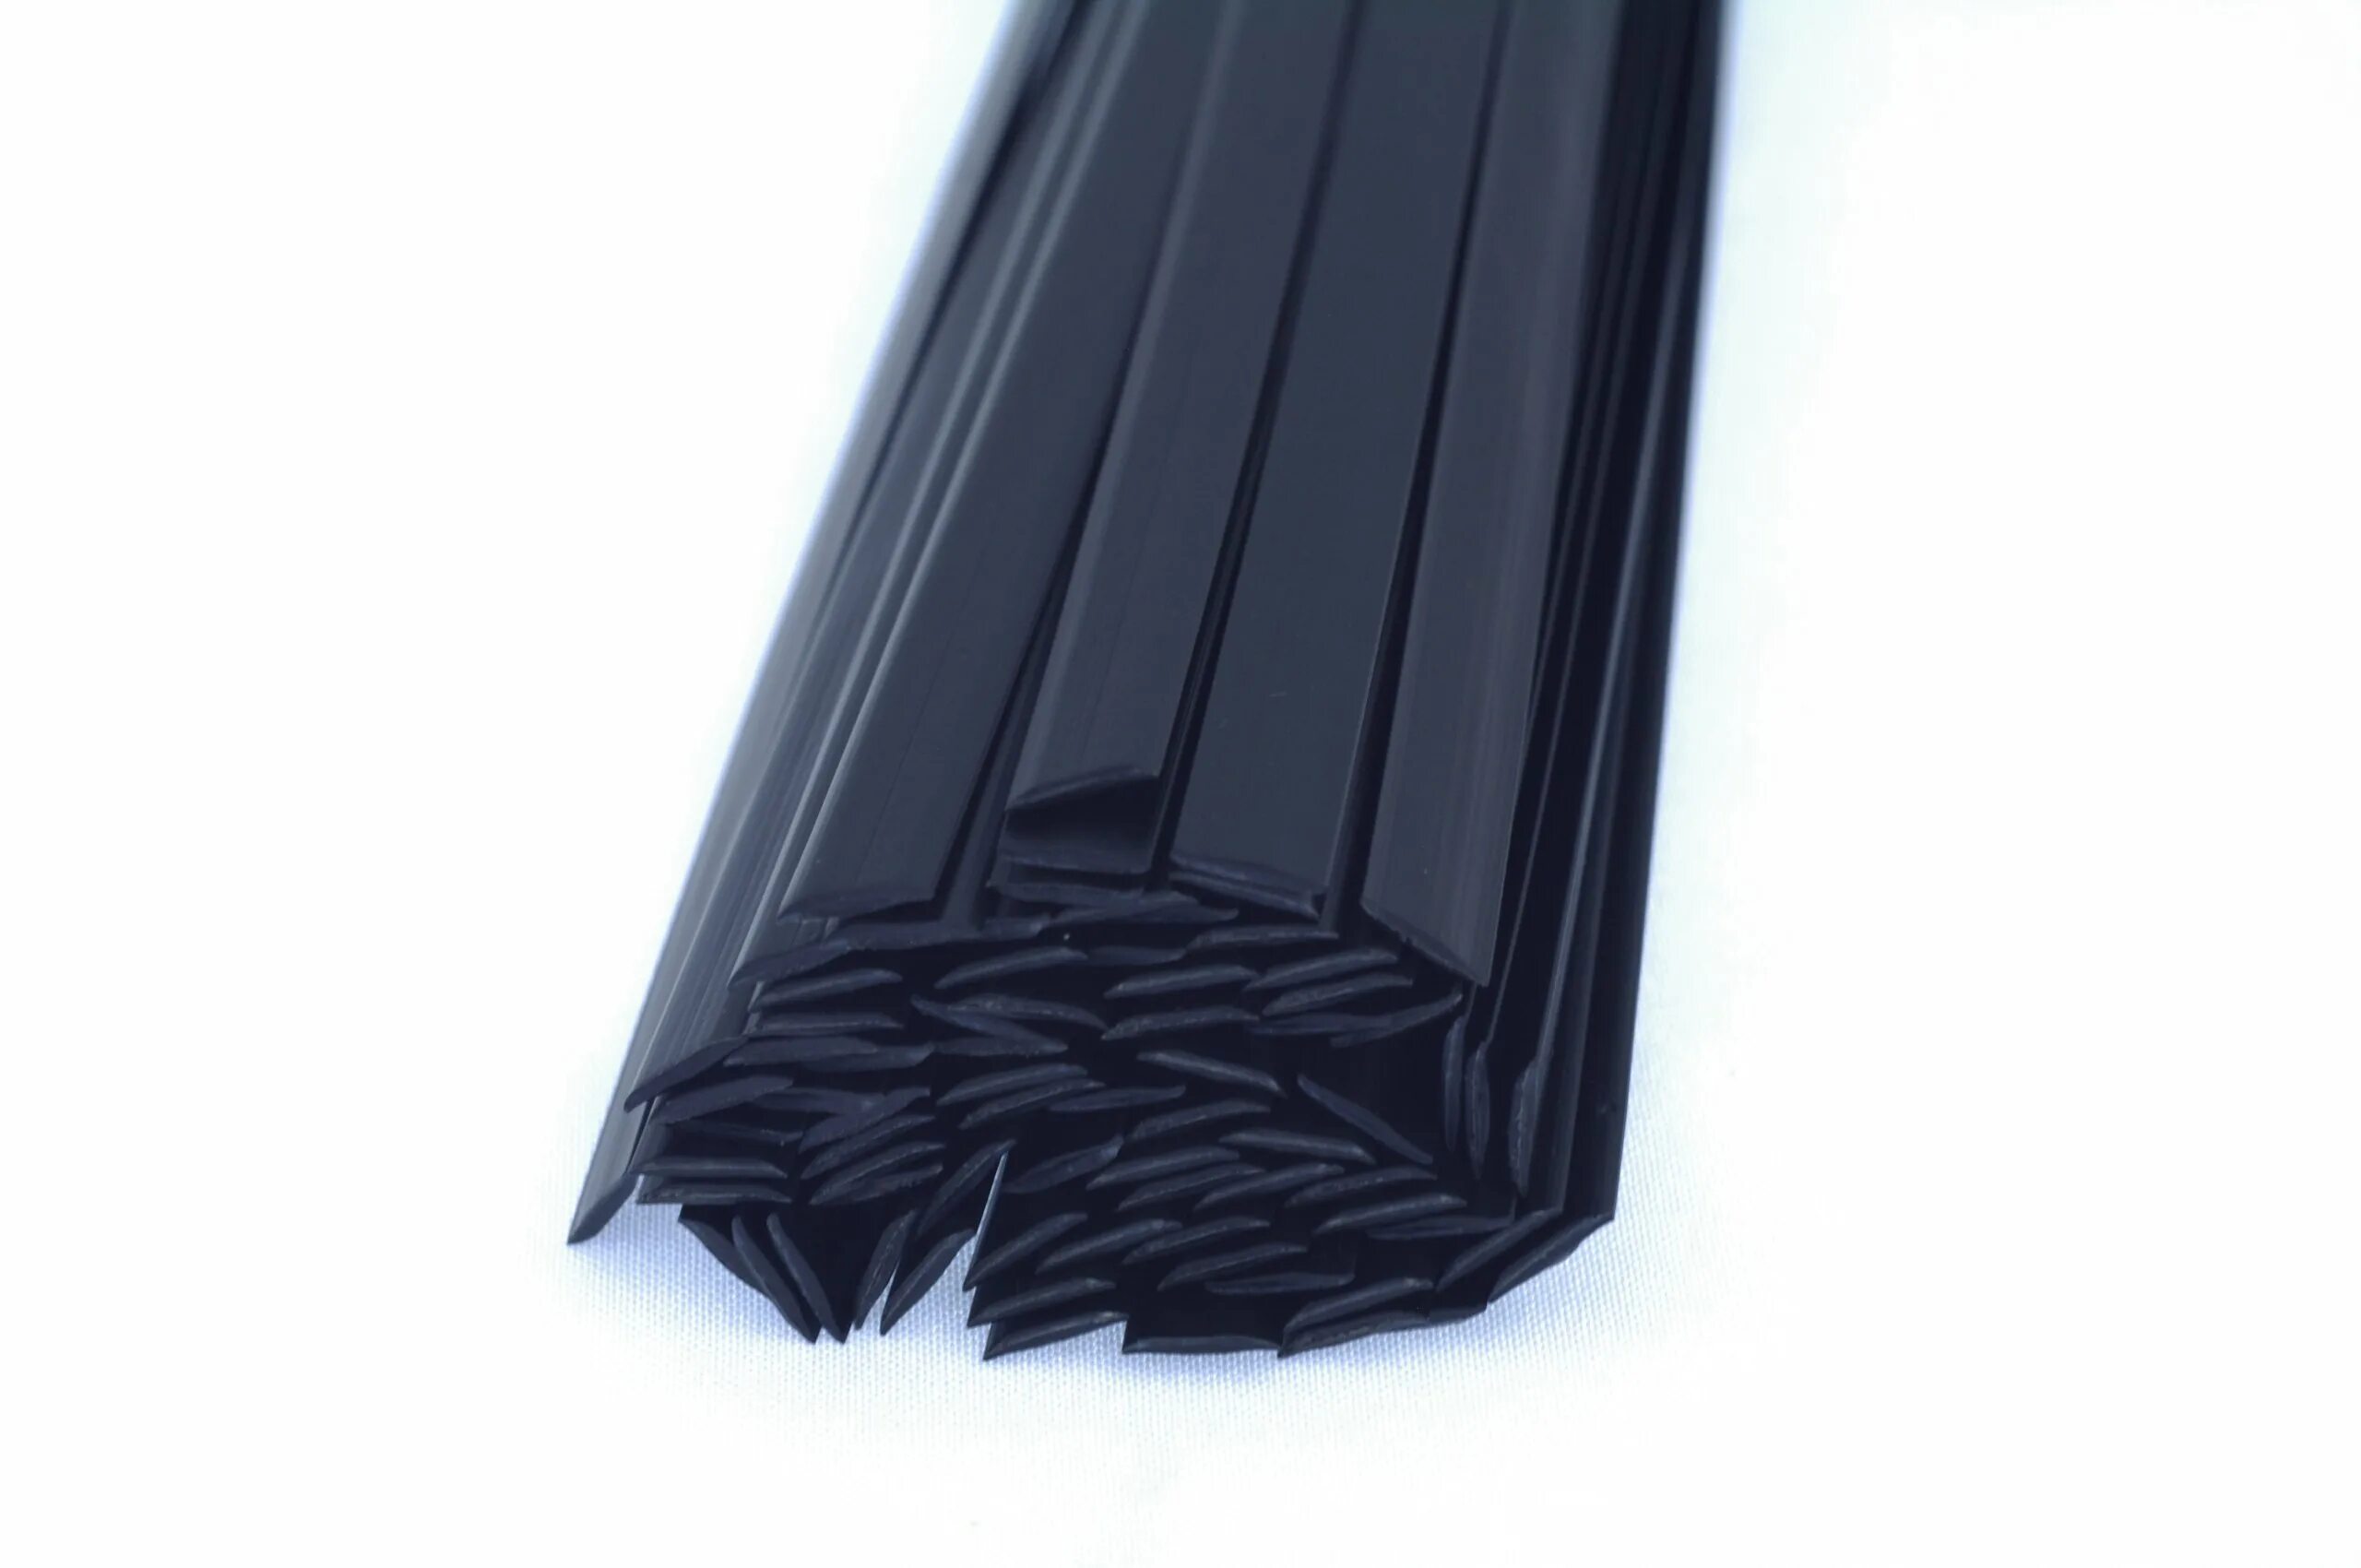 5 х 15 мм. Профиль "Квадра" глубина 90 мм черный пластик 3мм. АБС пластик чёрный 1мм полоса 5 мм. Профиль pp1381. Пластиковые полоски 1.5 мм 60х180.